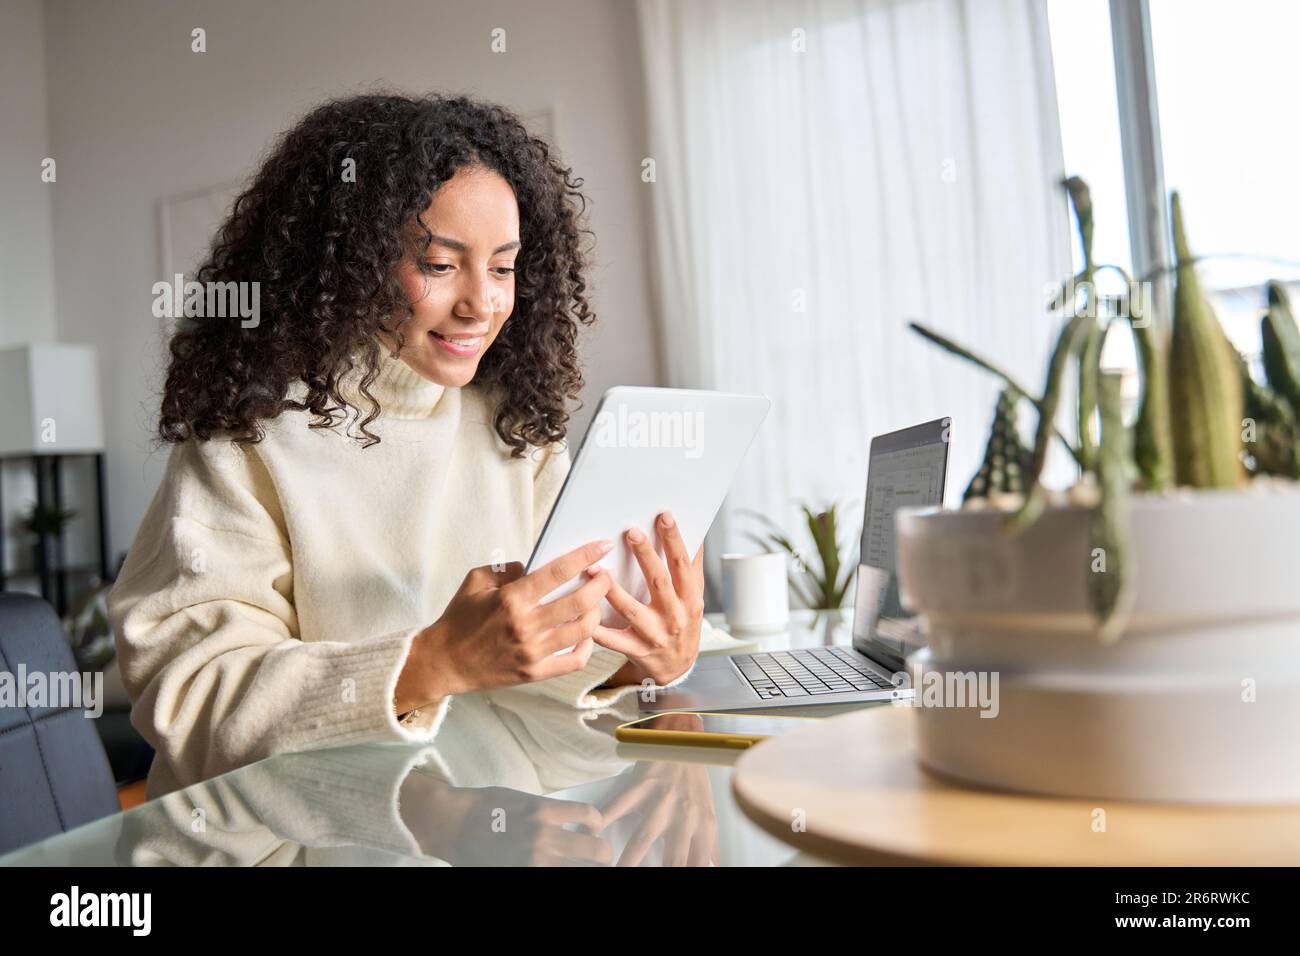 Young happy latin woman using digital tablet at home looking at tab. Stock Photo